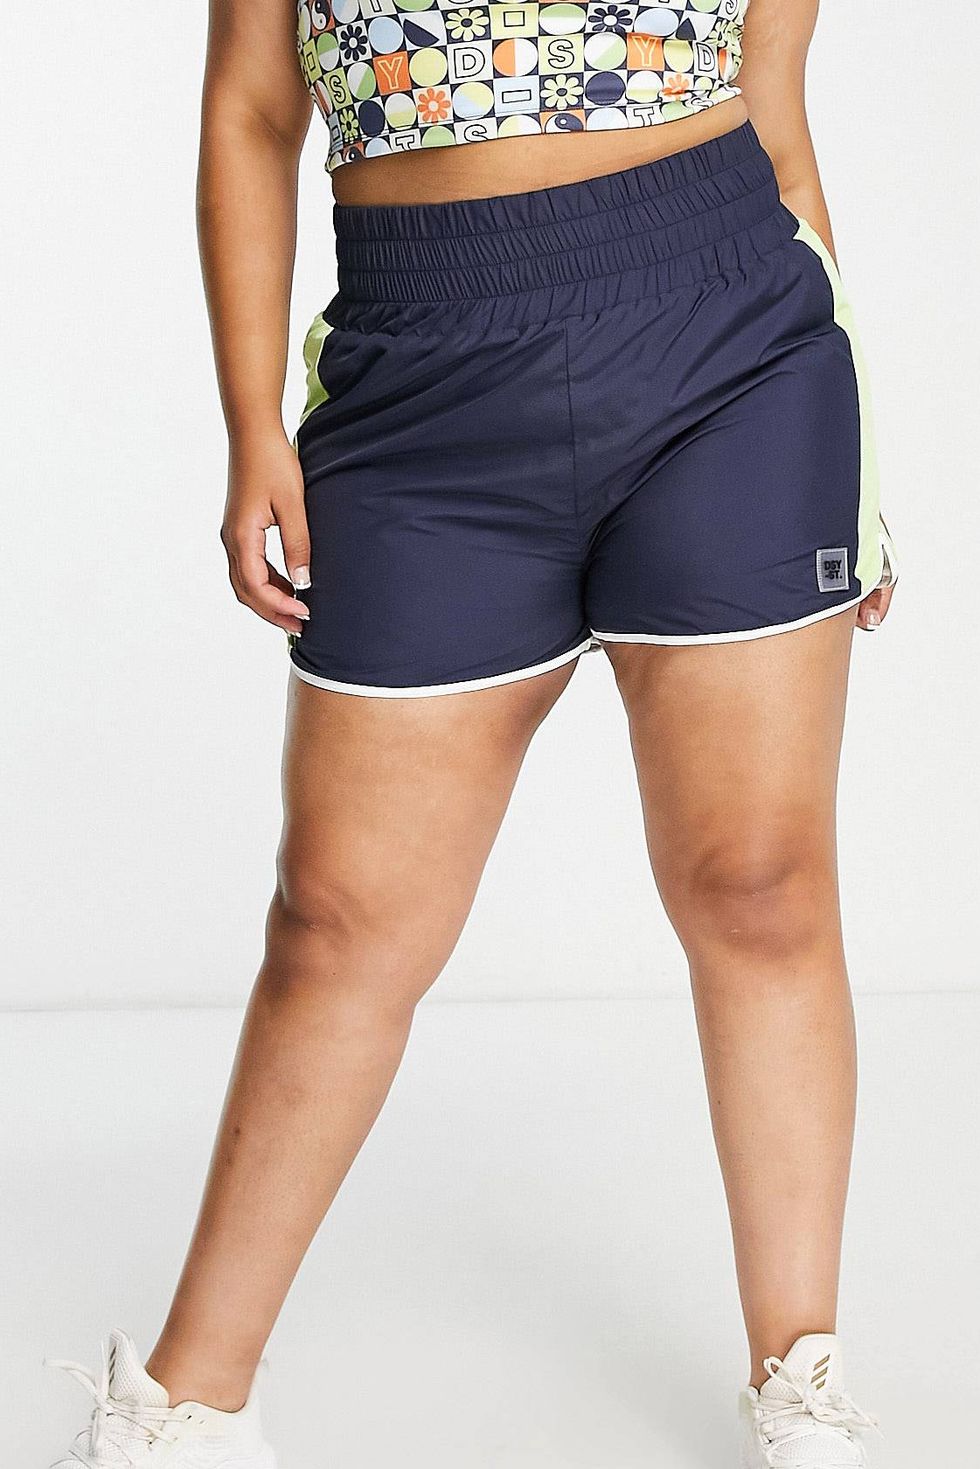 Best Deal for Daisy Shorts for Women XL Black Sport Shorts for Women Big